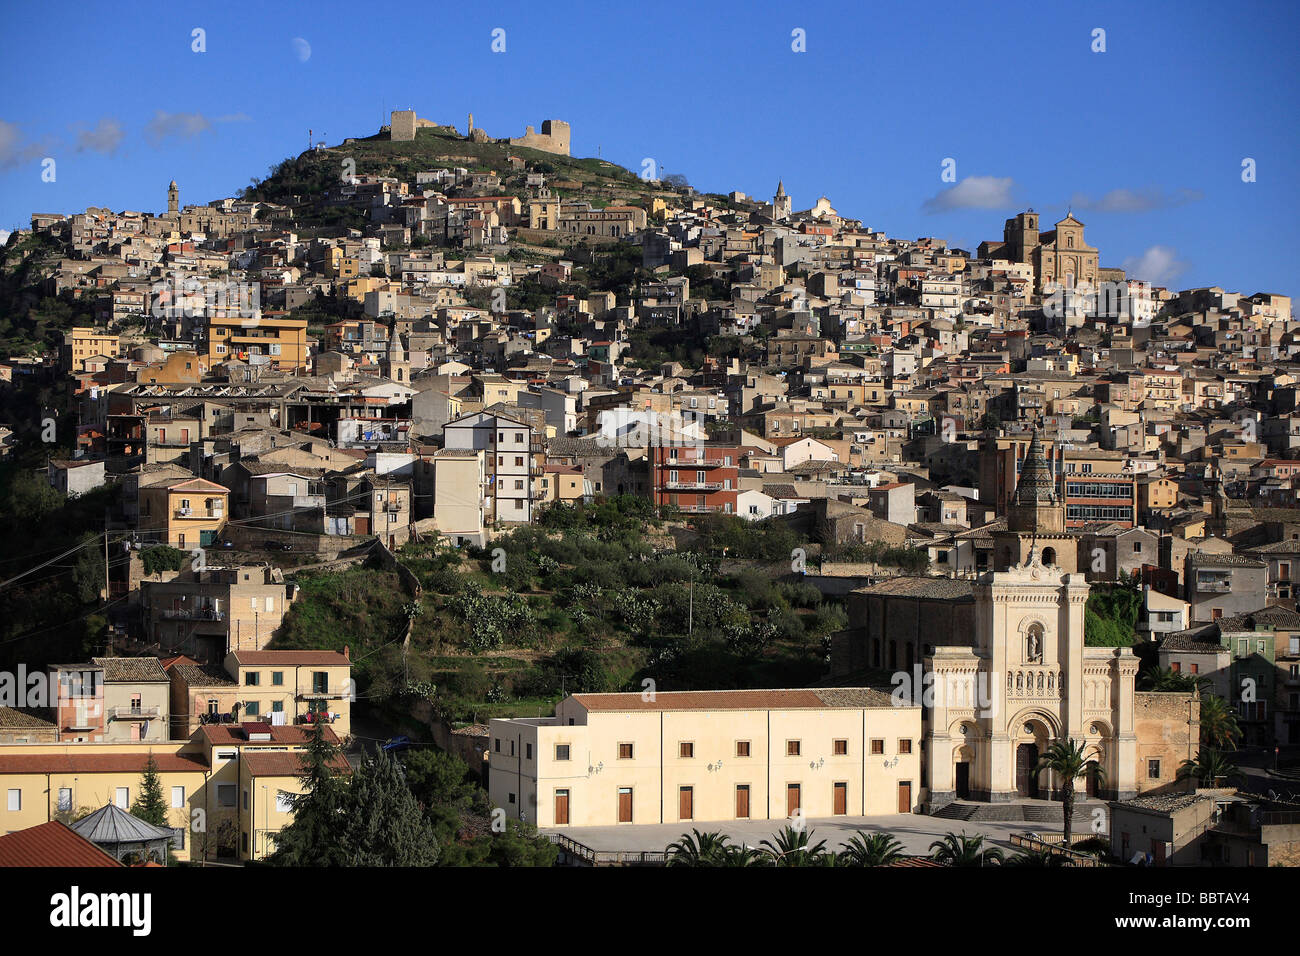 Village view, Agira, Sicily, Italy Stock Photo